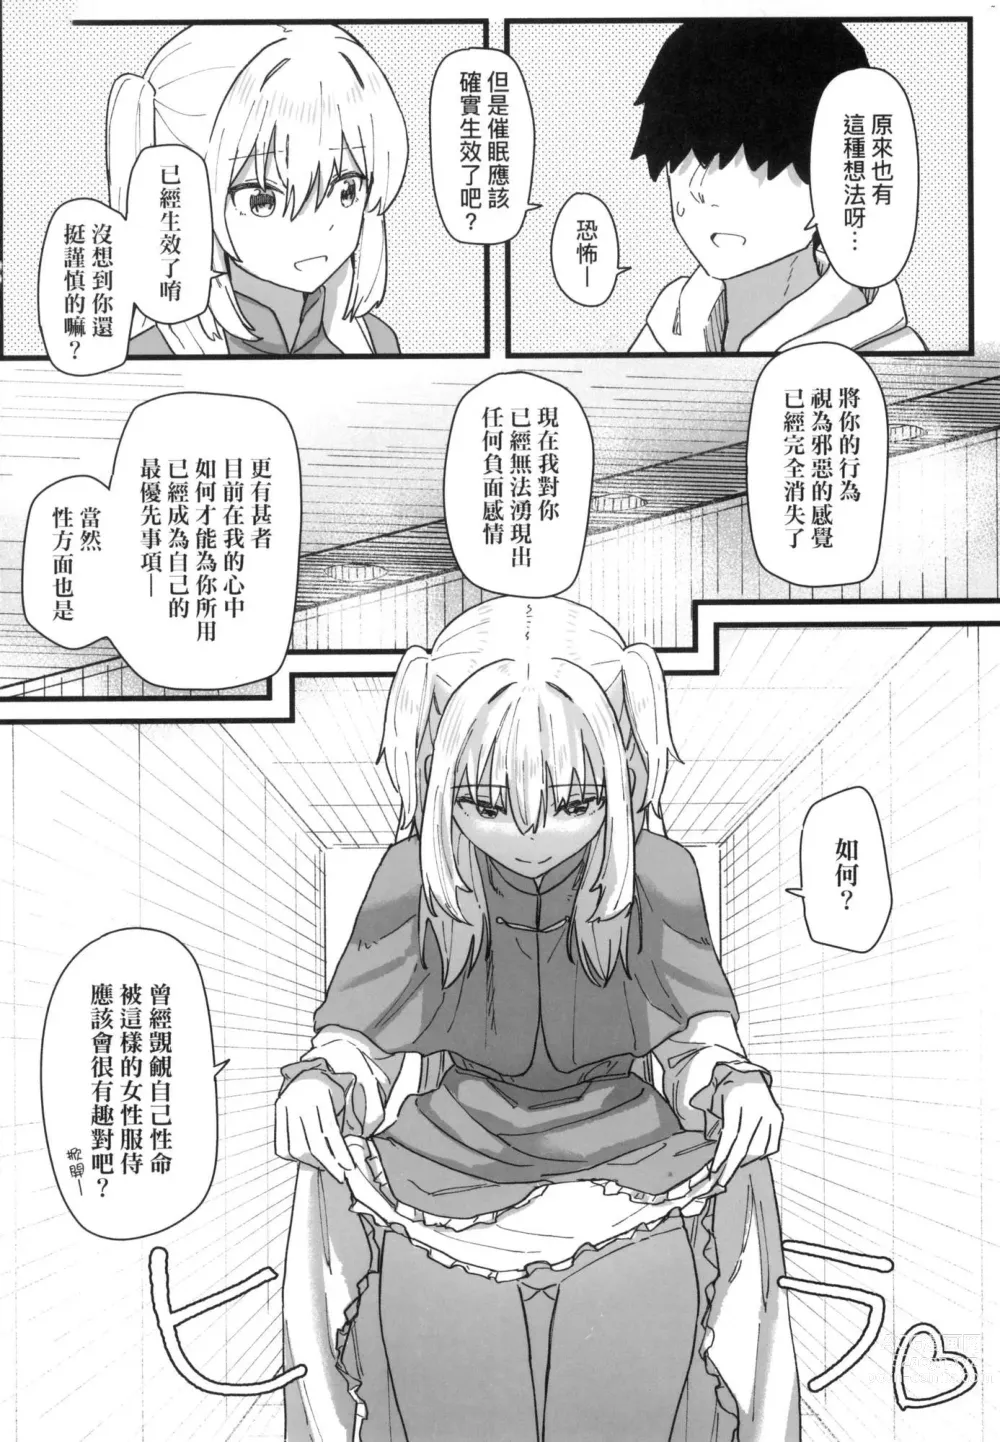 Page 152 of manga 常識改變活動紀錄 (decensored)